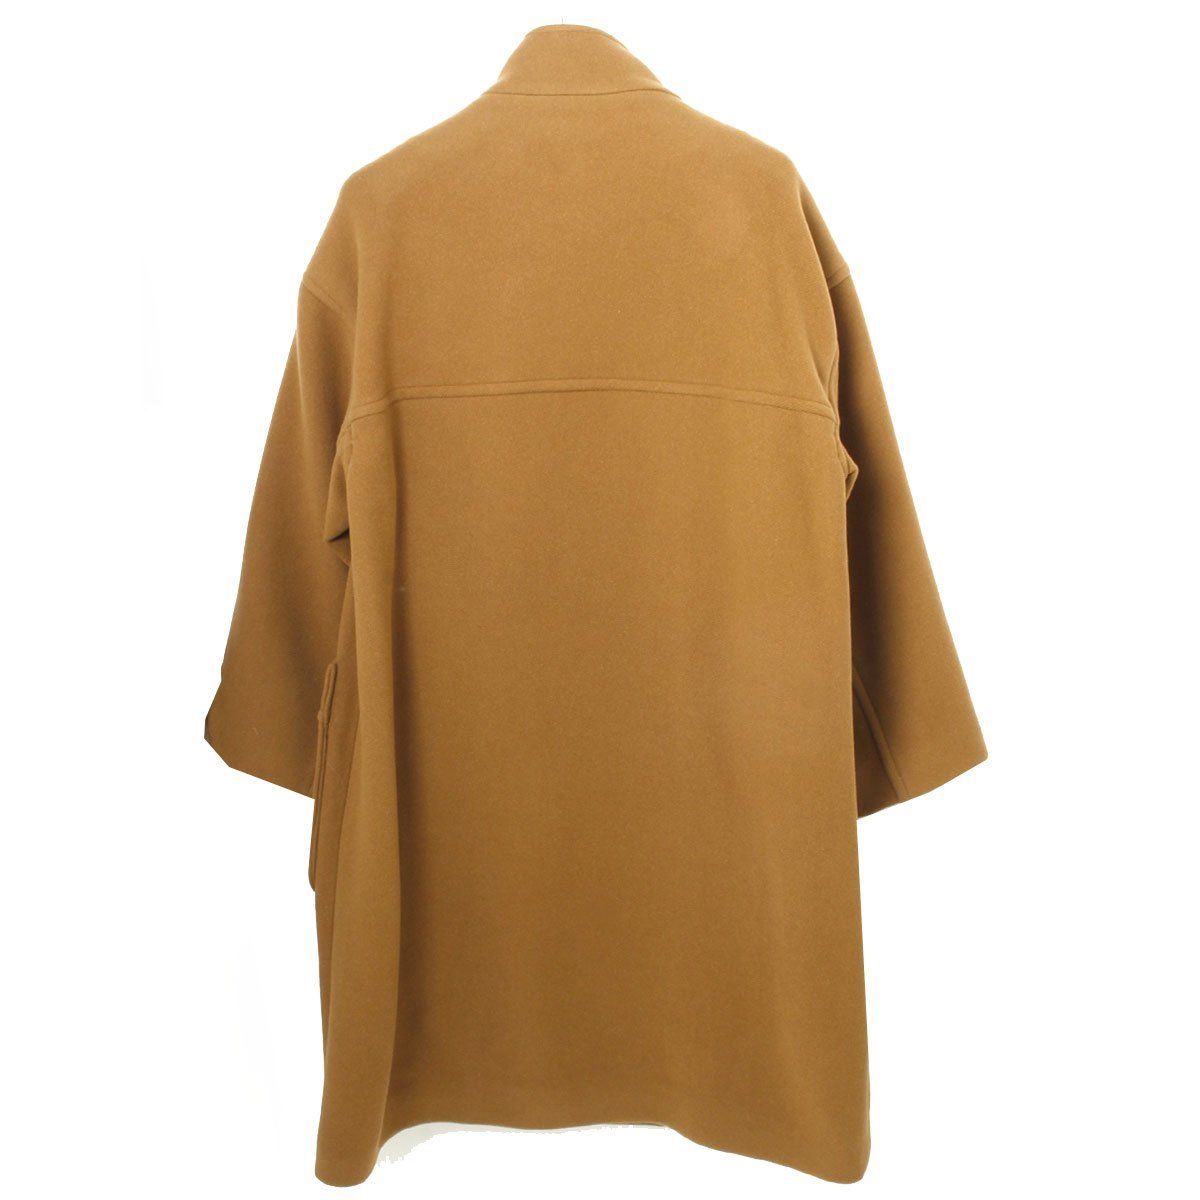  новый товар Vanessa Bruno PAVEL MANTEAU WOOL-BLENDpa bell шерстяное пальто обычная цена 103,250 иен size38 Camel Vanessa Bruno 